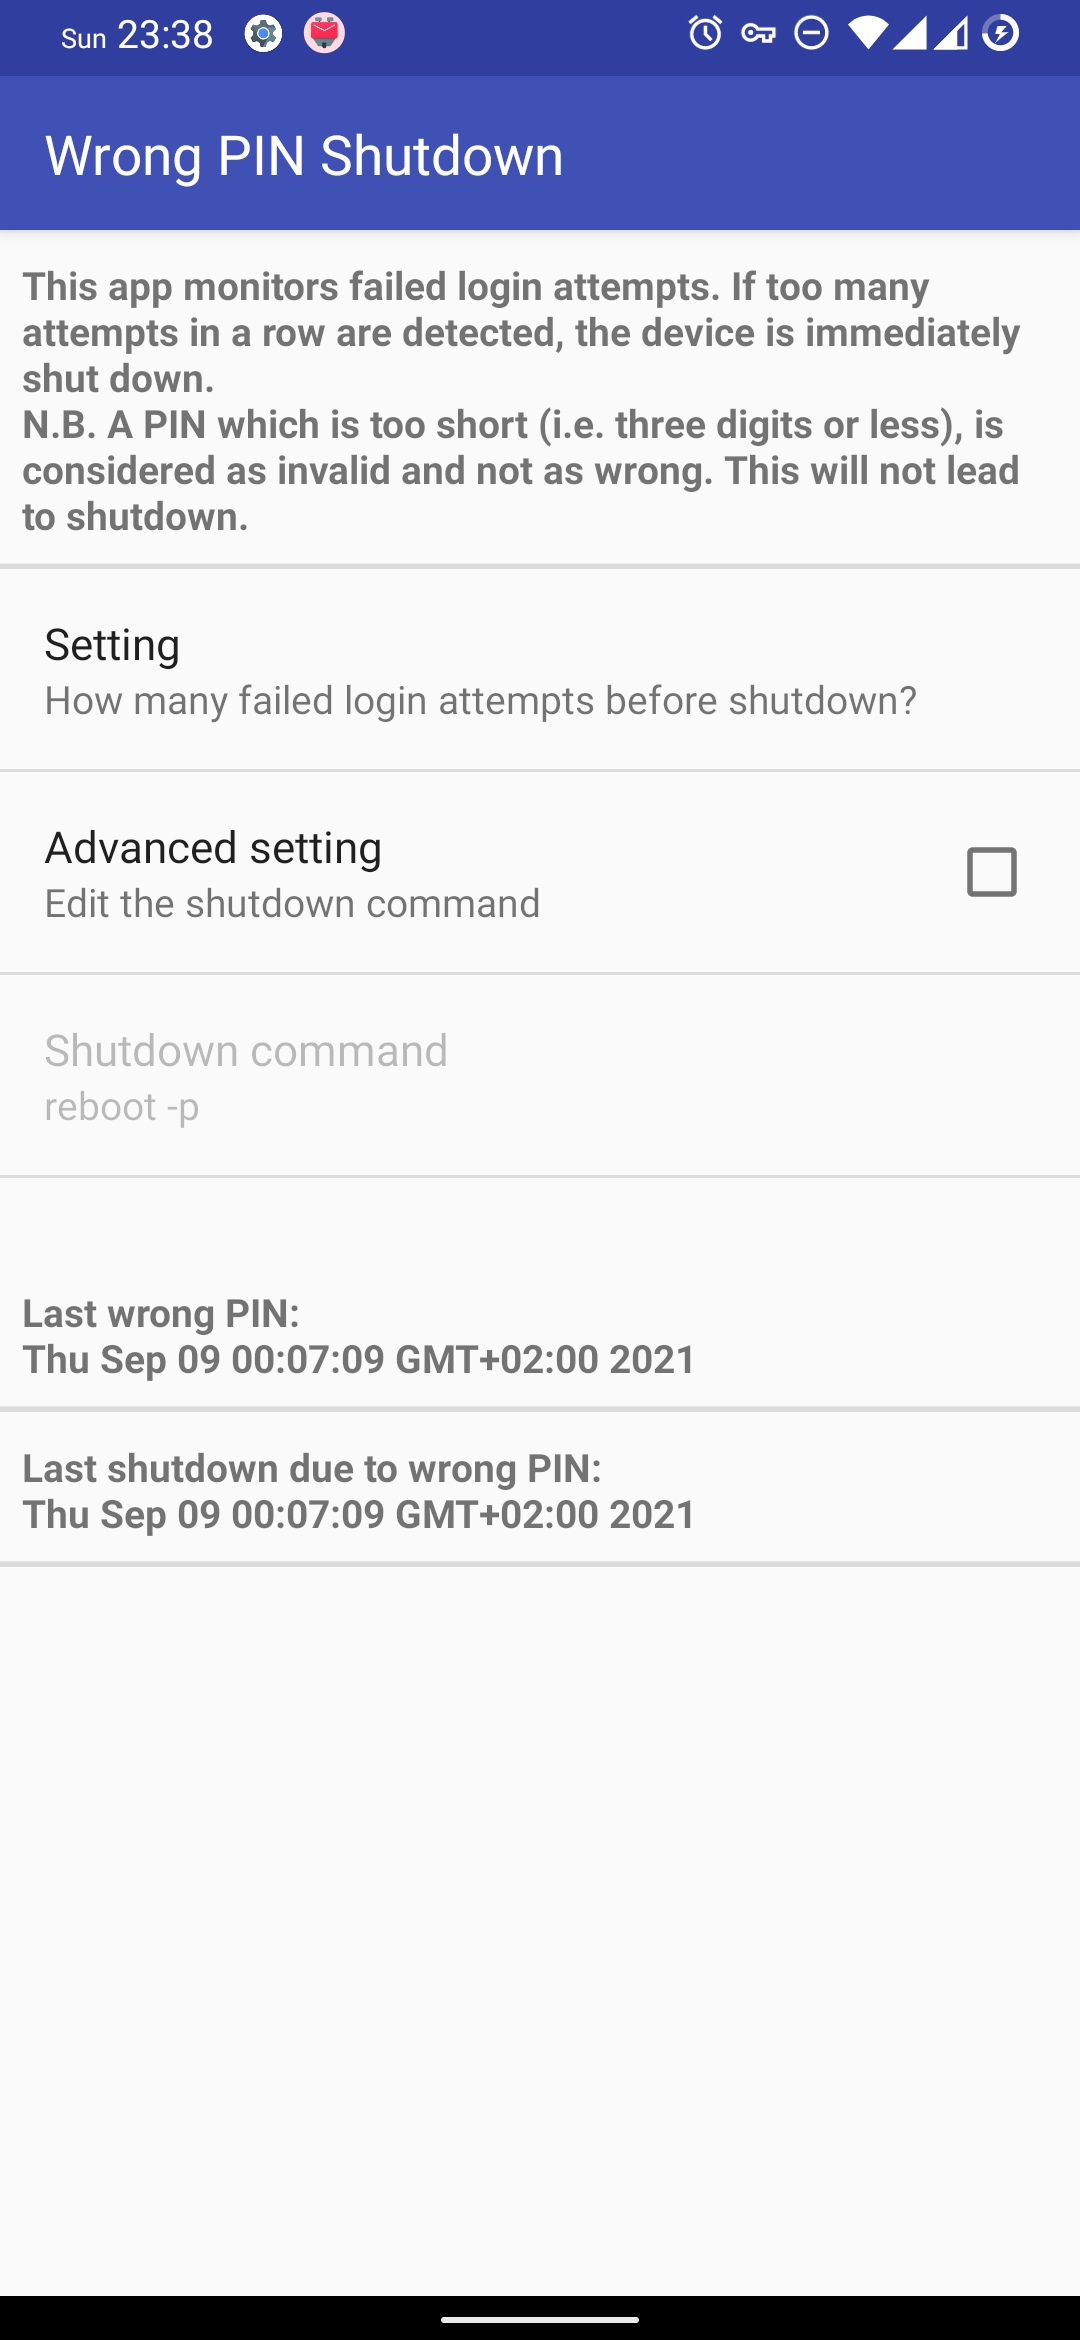 android-lockdown-mode-wrong-pin-shutdown-settings